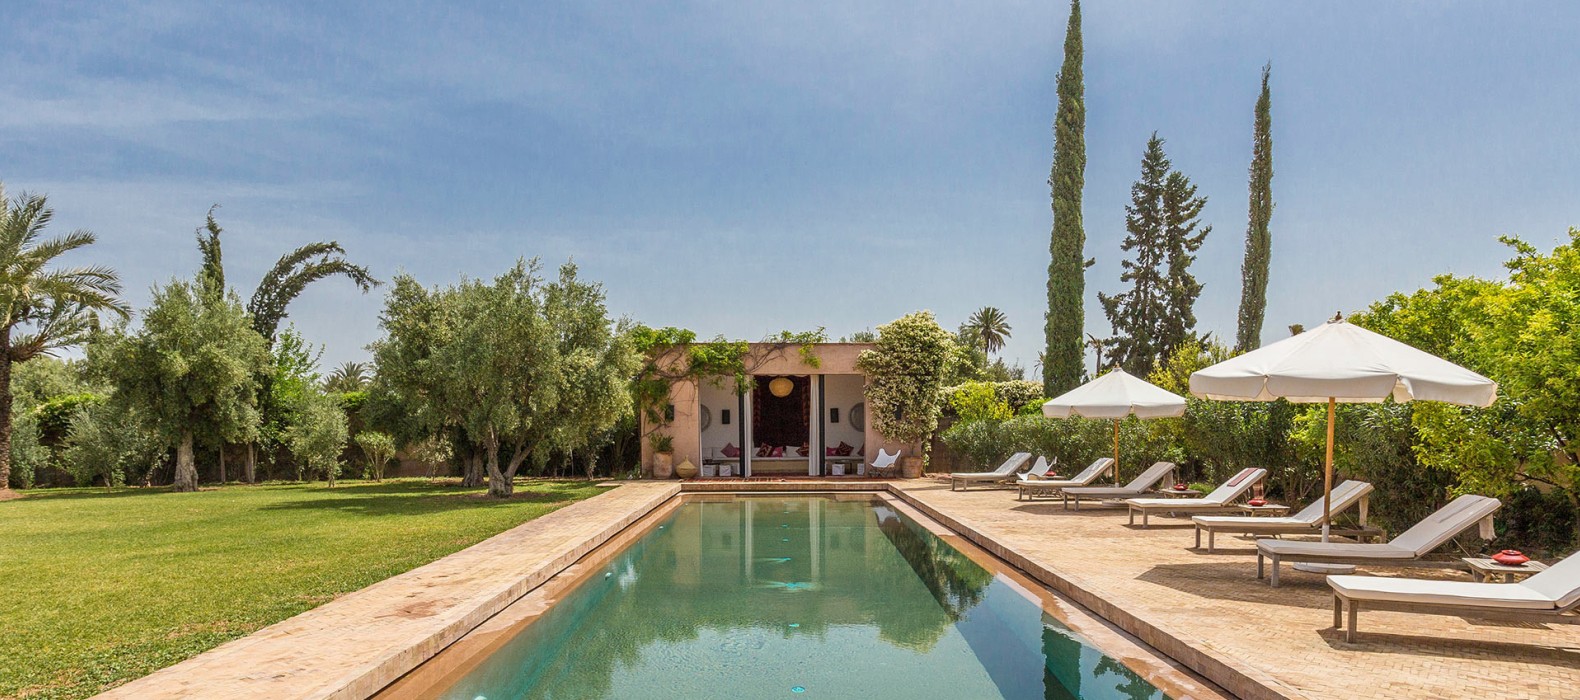 Pool area of Villa Zaina in Marrakech